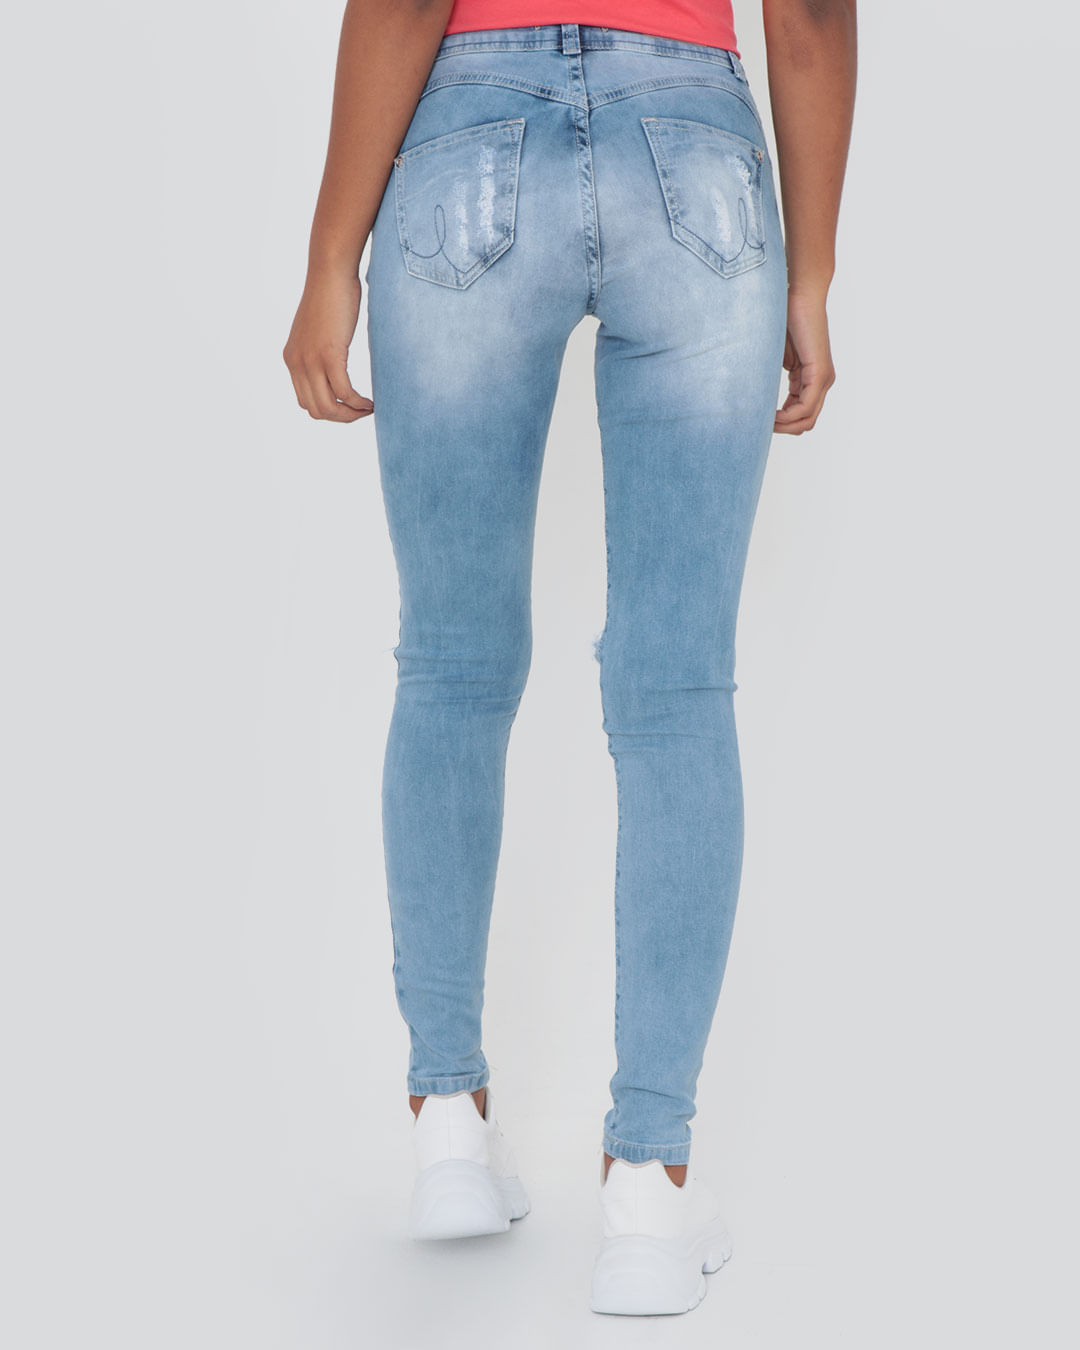 Calca-J-F-Ad-Ly-26420---Blue-Jeans-Medio